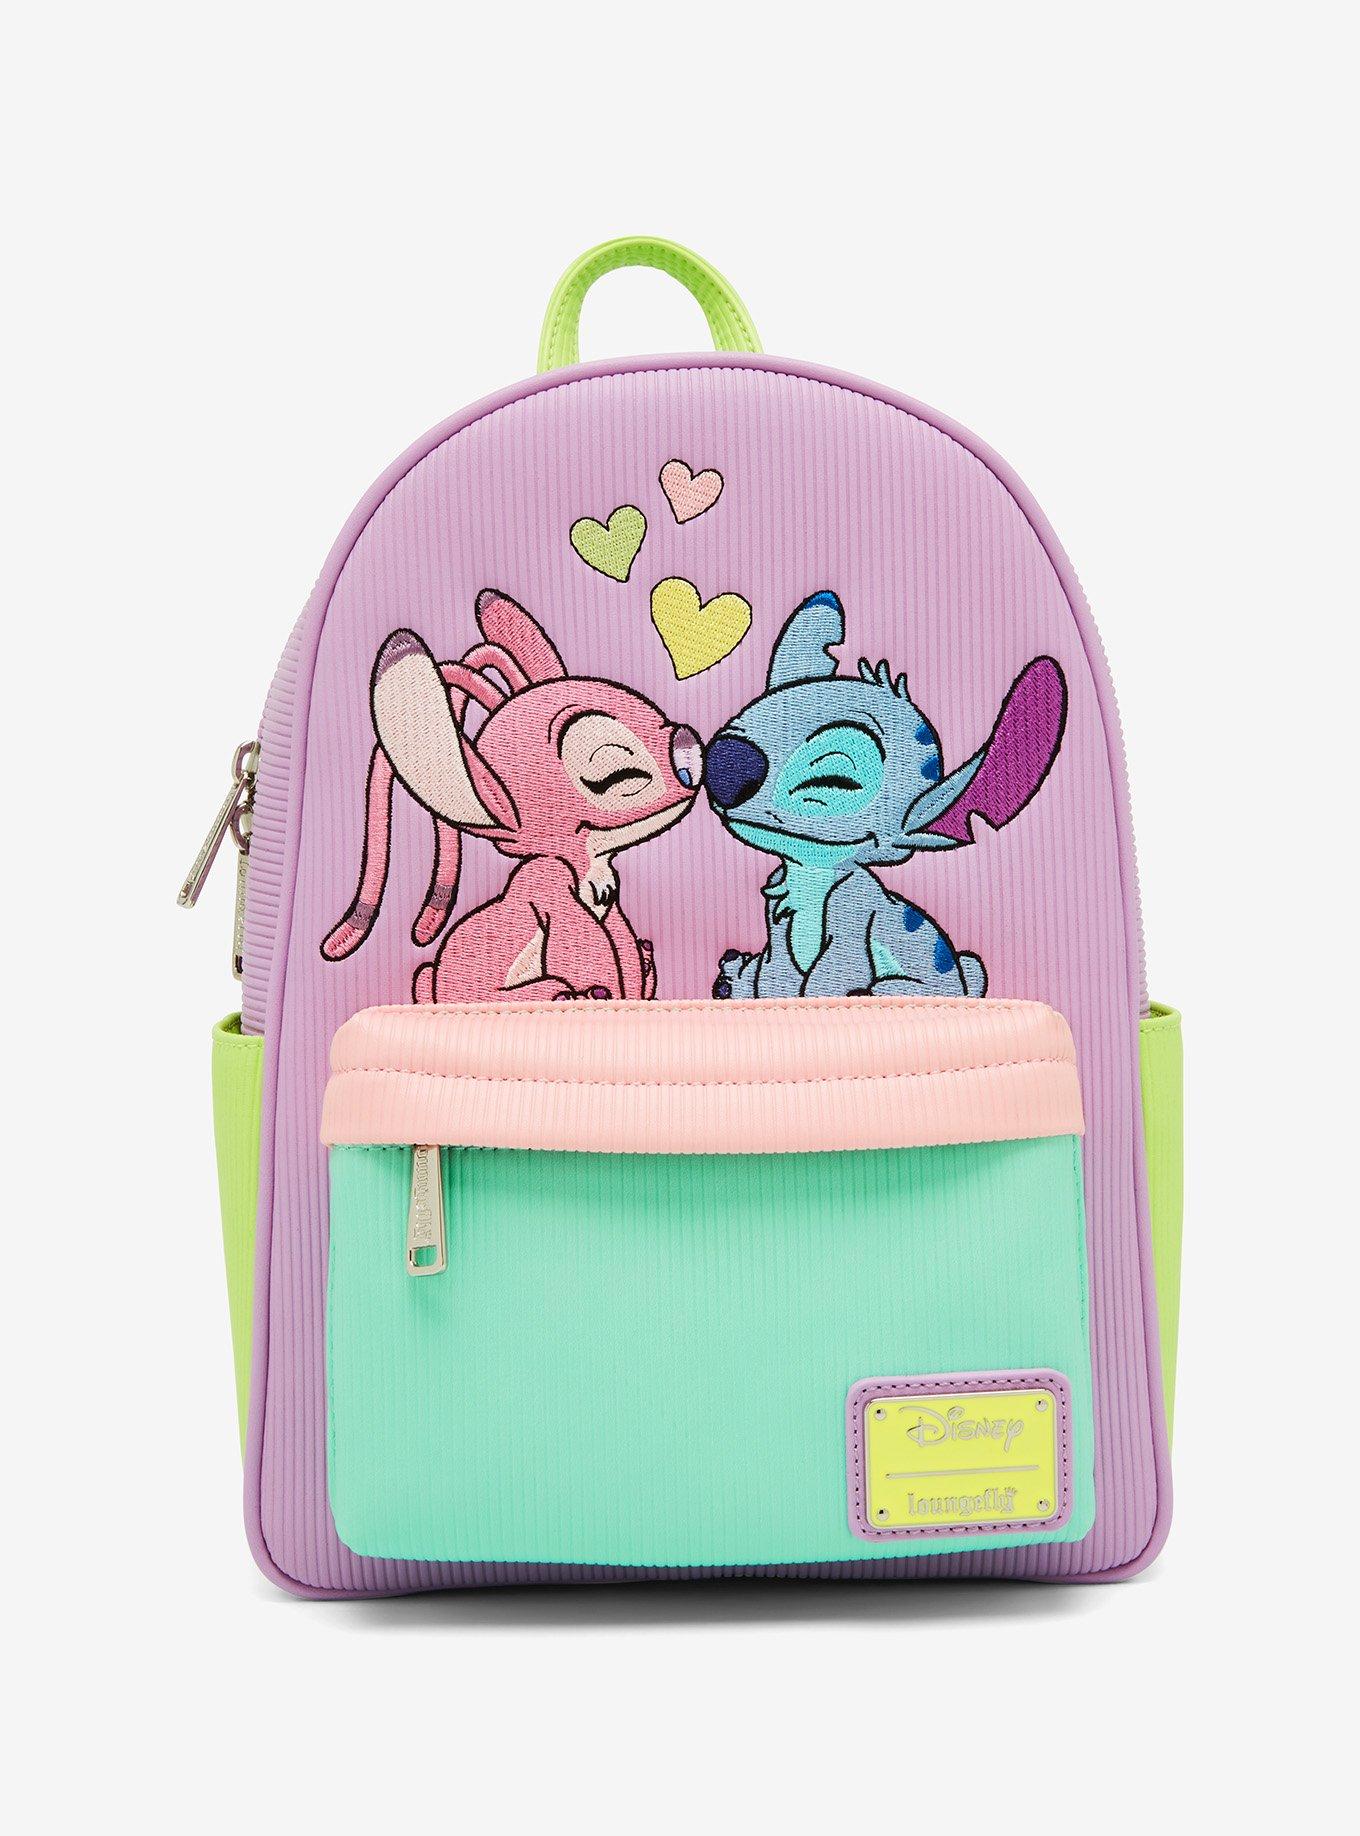 Disney Animation Movie Stitch Backpack School Anime Boys Girls